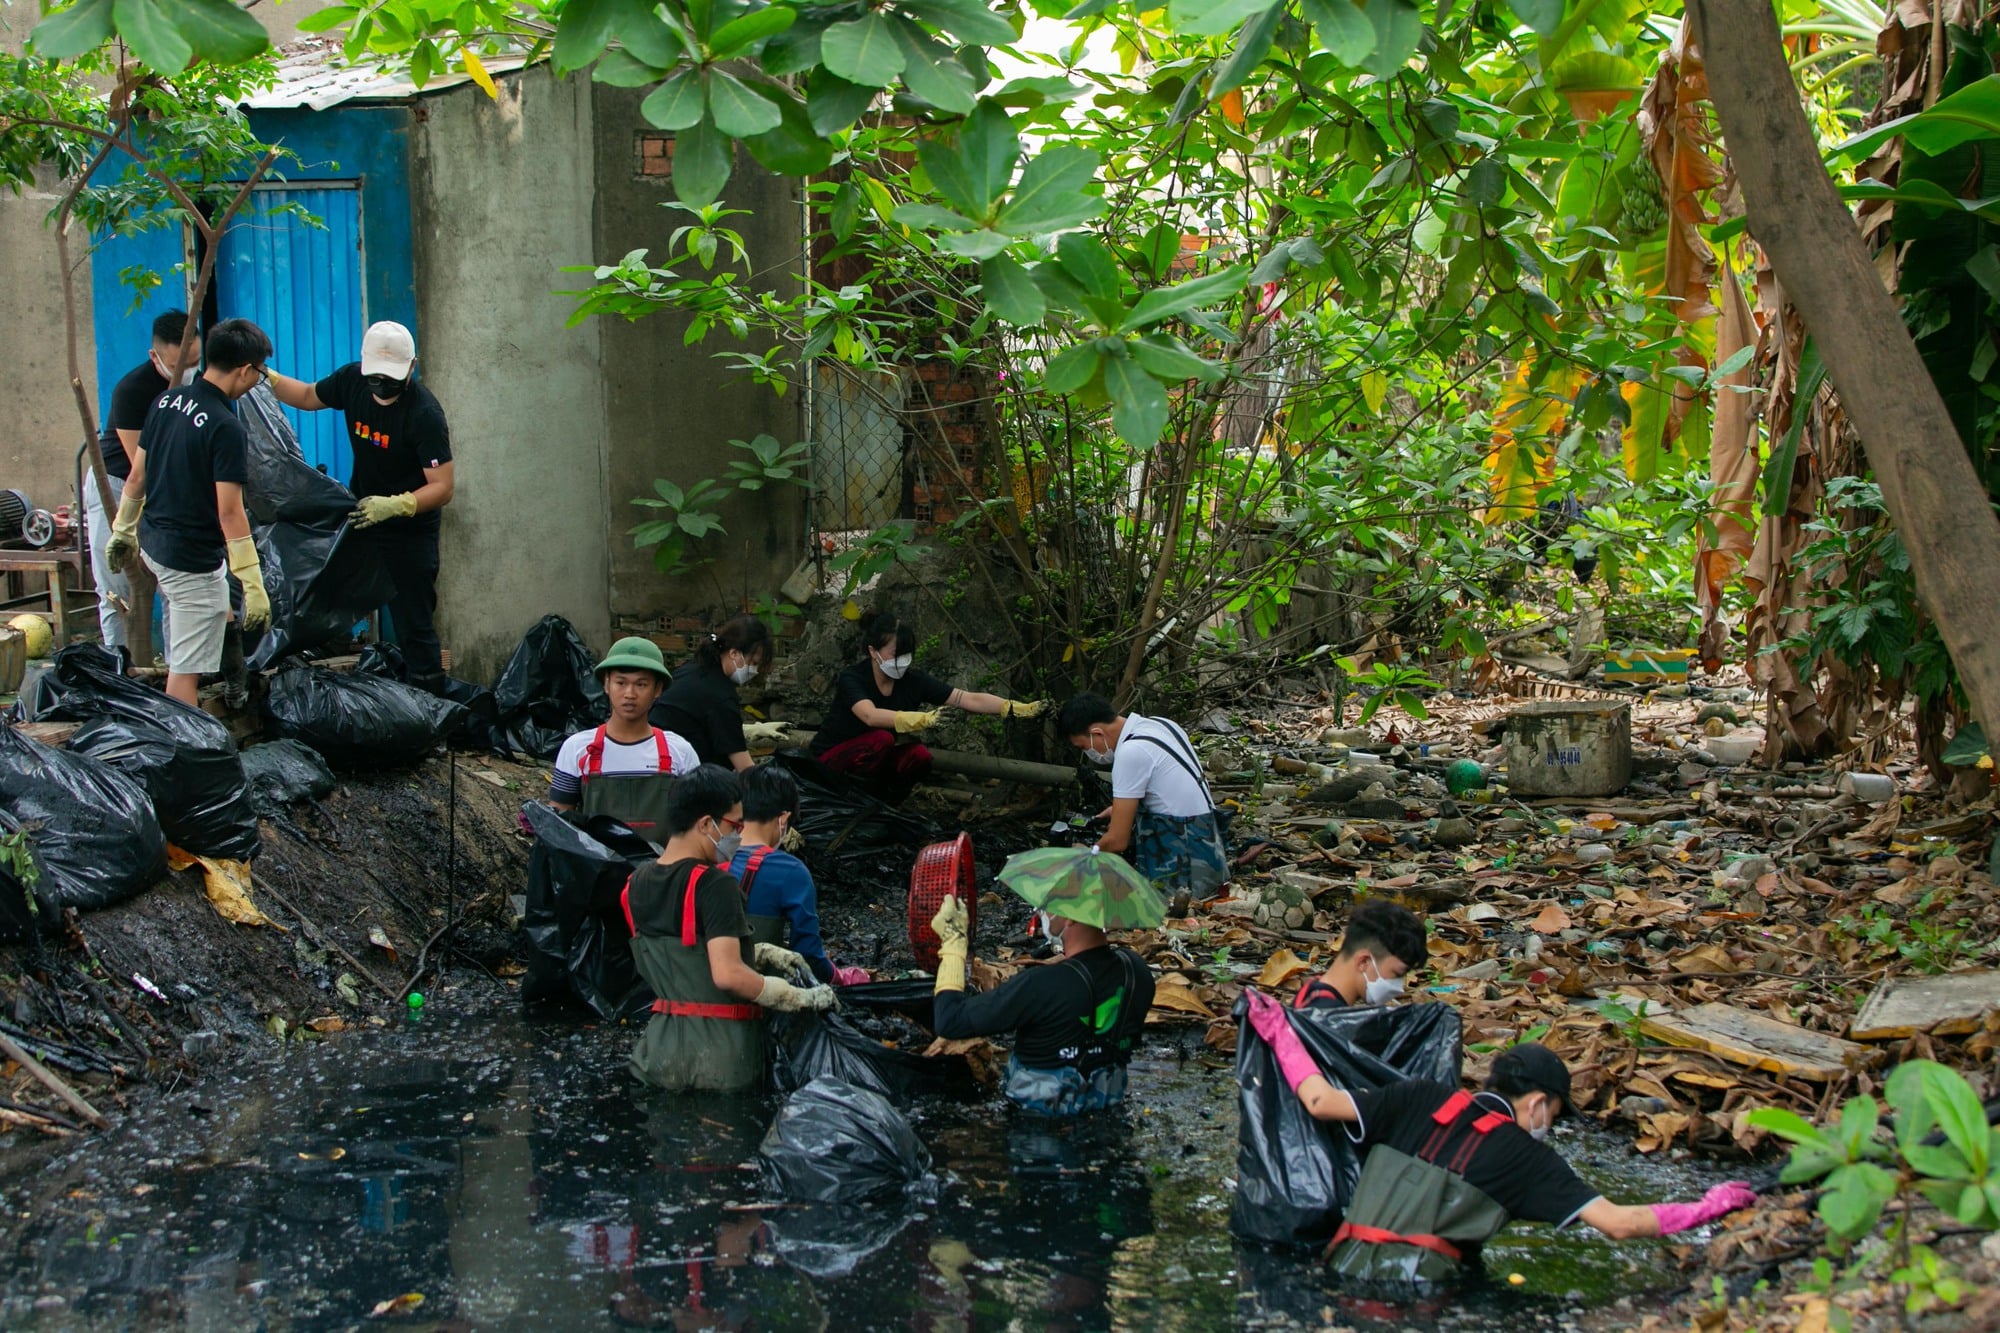 The Saigon Green squad soaks in the dark canal